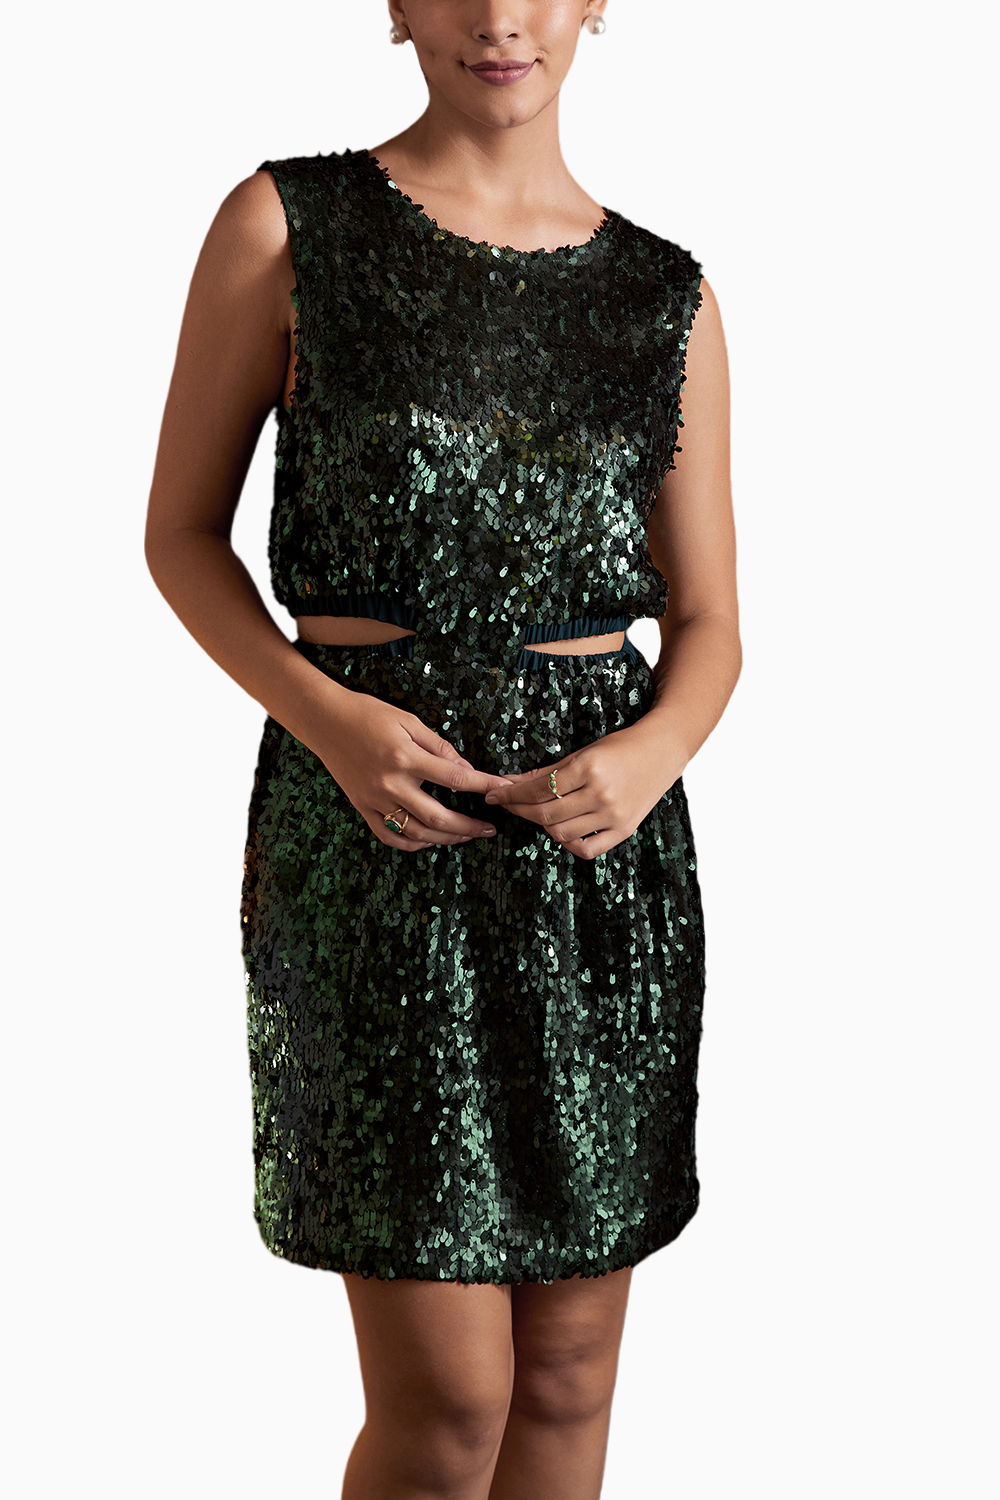 Glistening Jade Dress